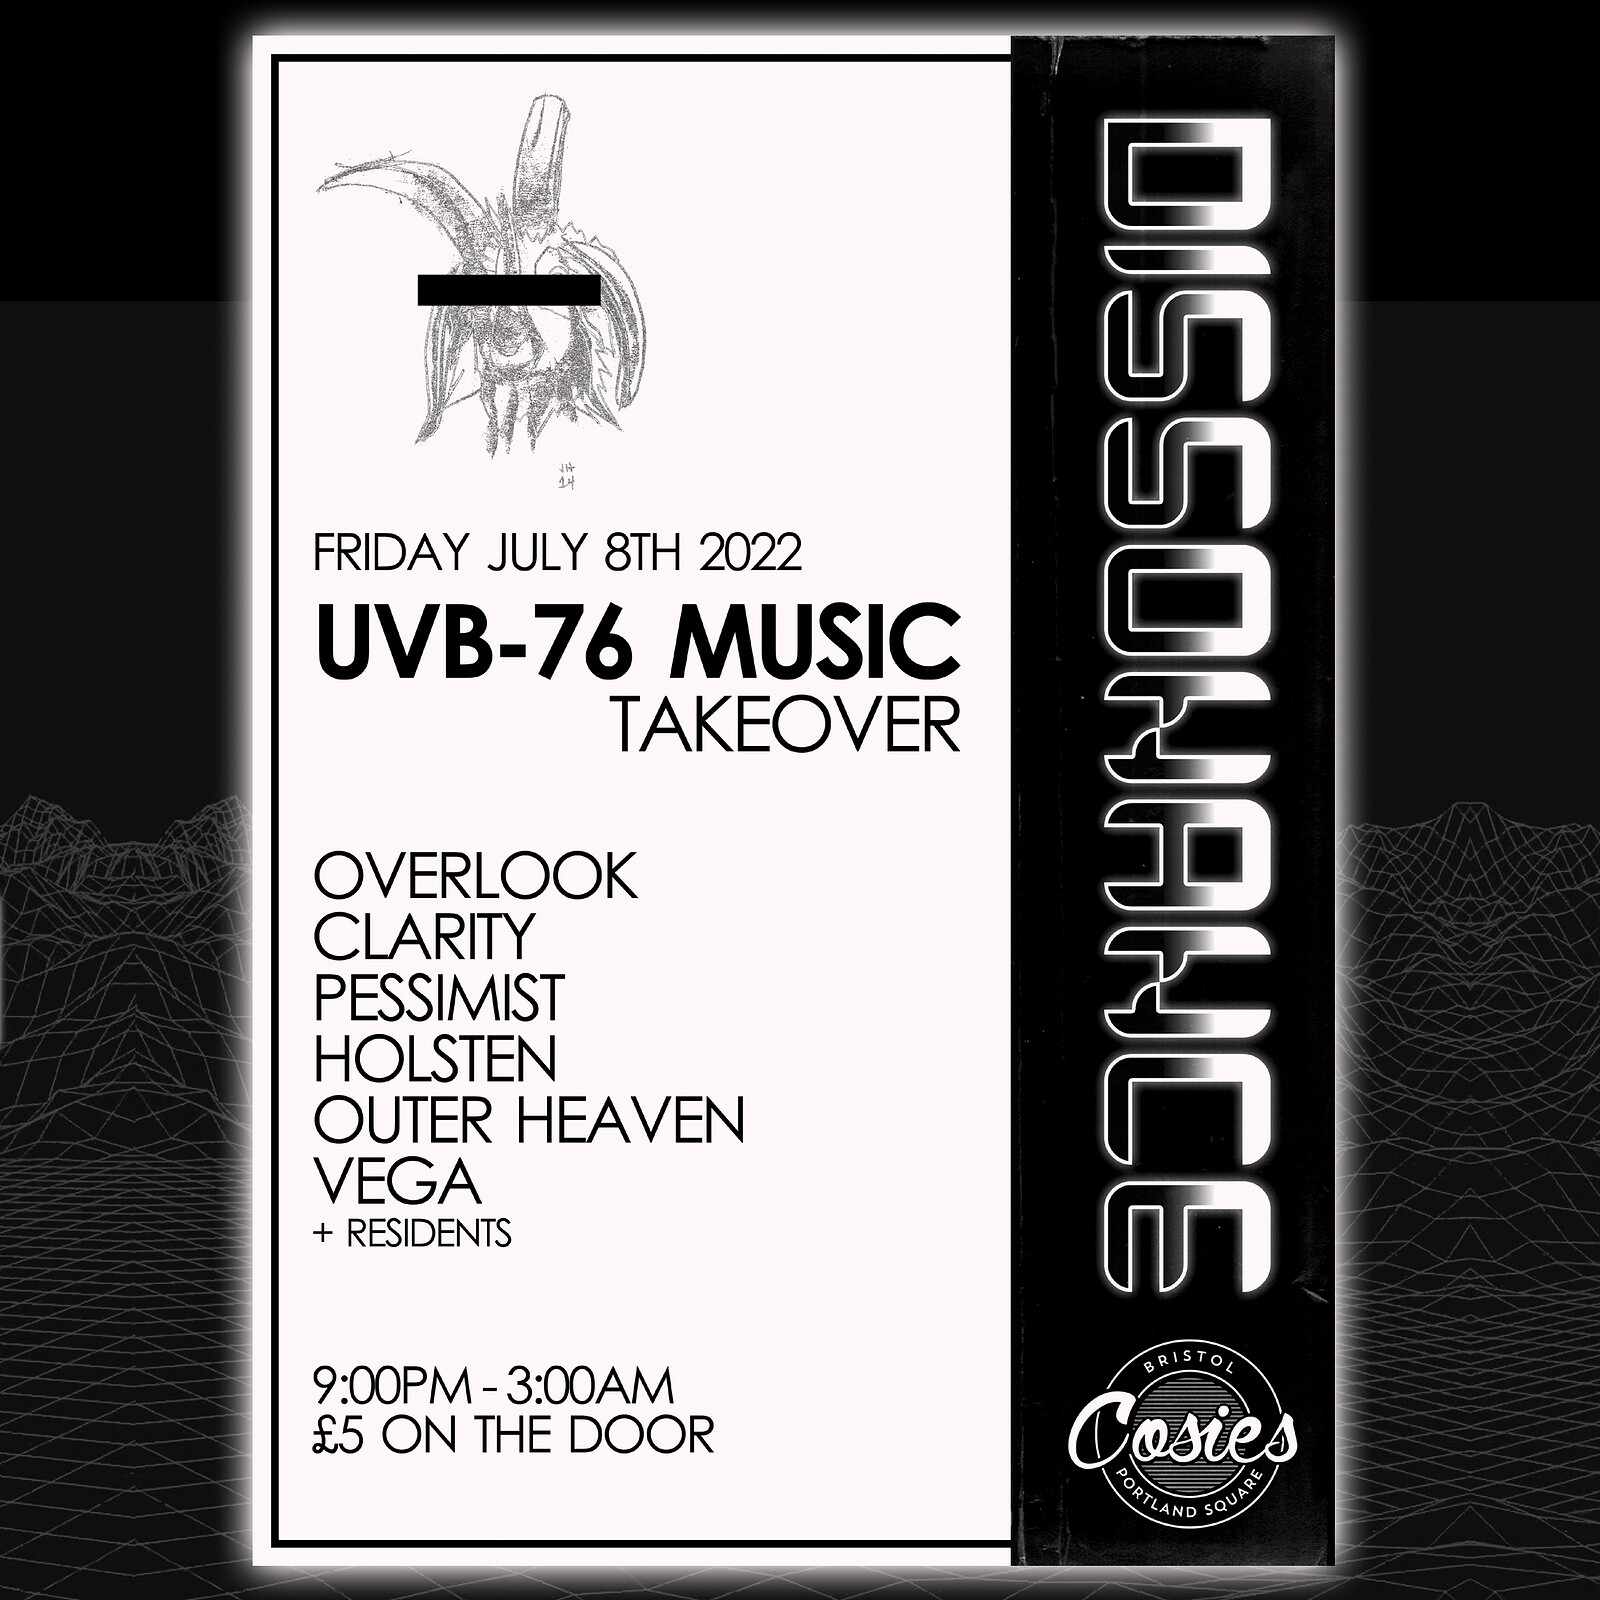 Dissonance Presents: UVB-76 Music at Cosies